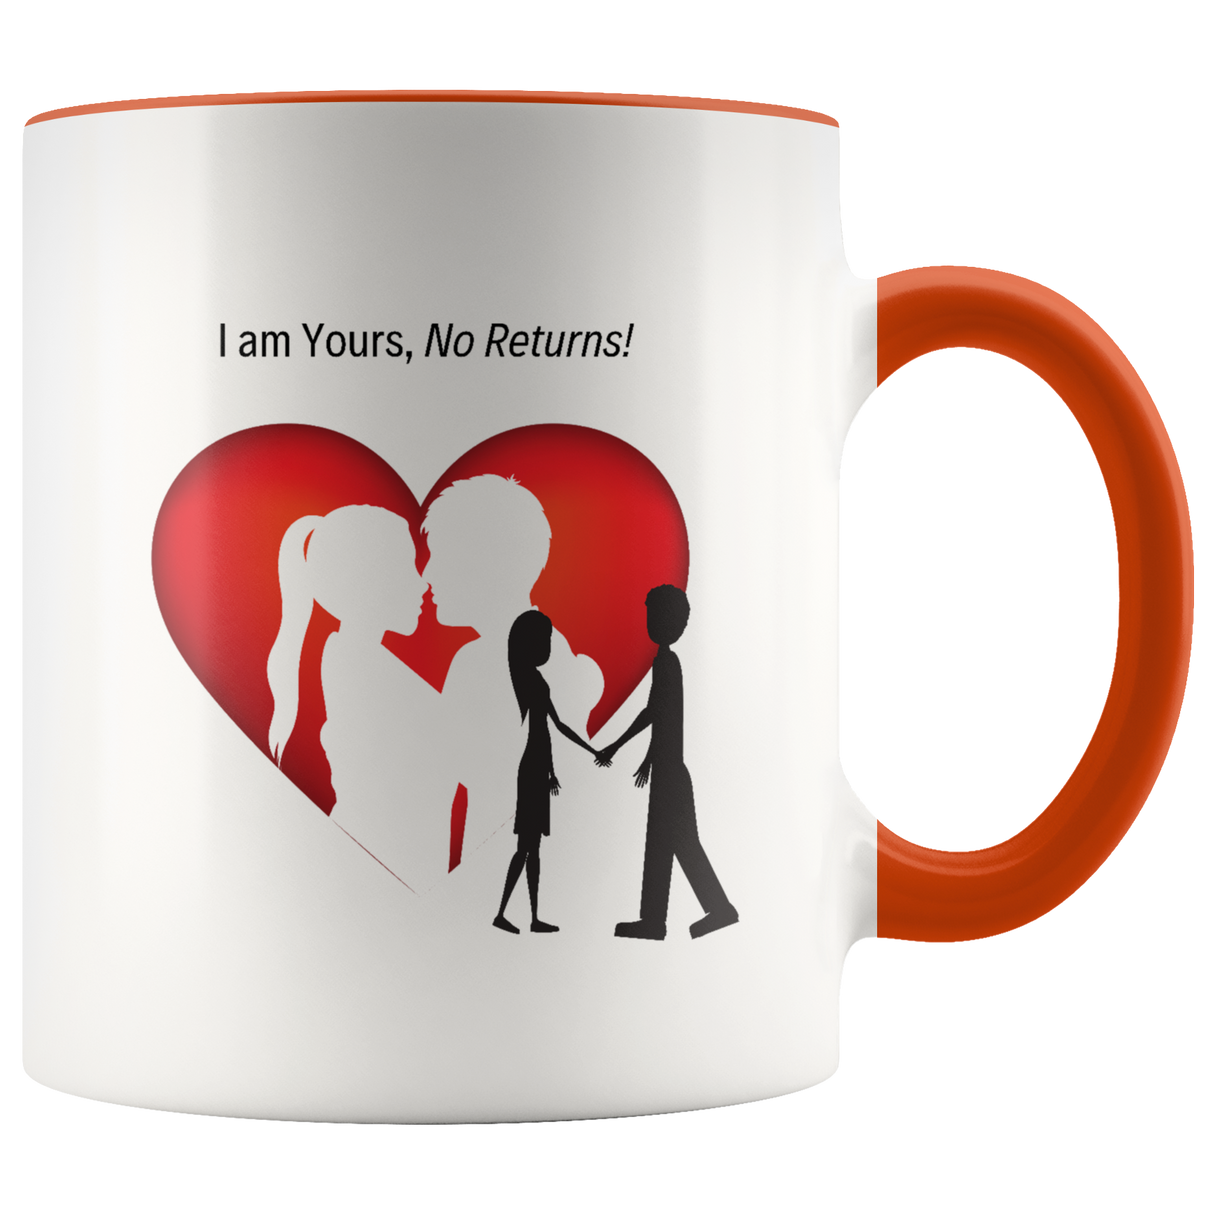 I'm Your Mug Ceramic Accent Mug - Orange | Shop Sassy Chick